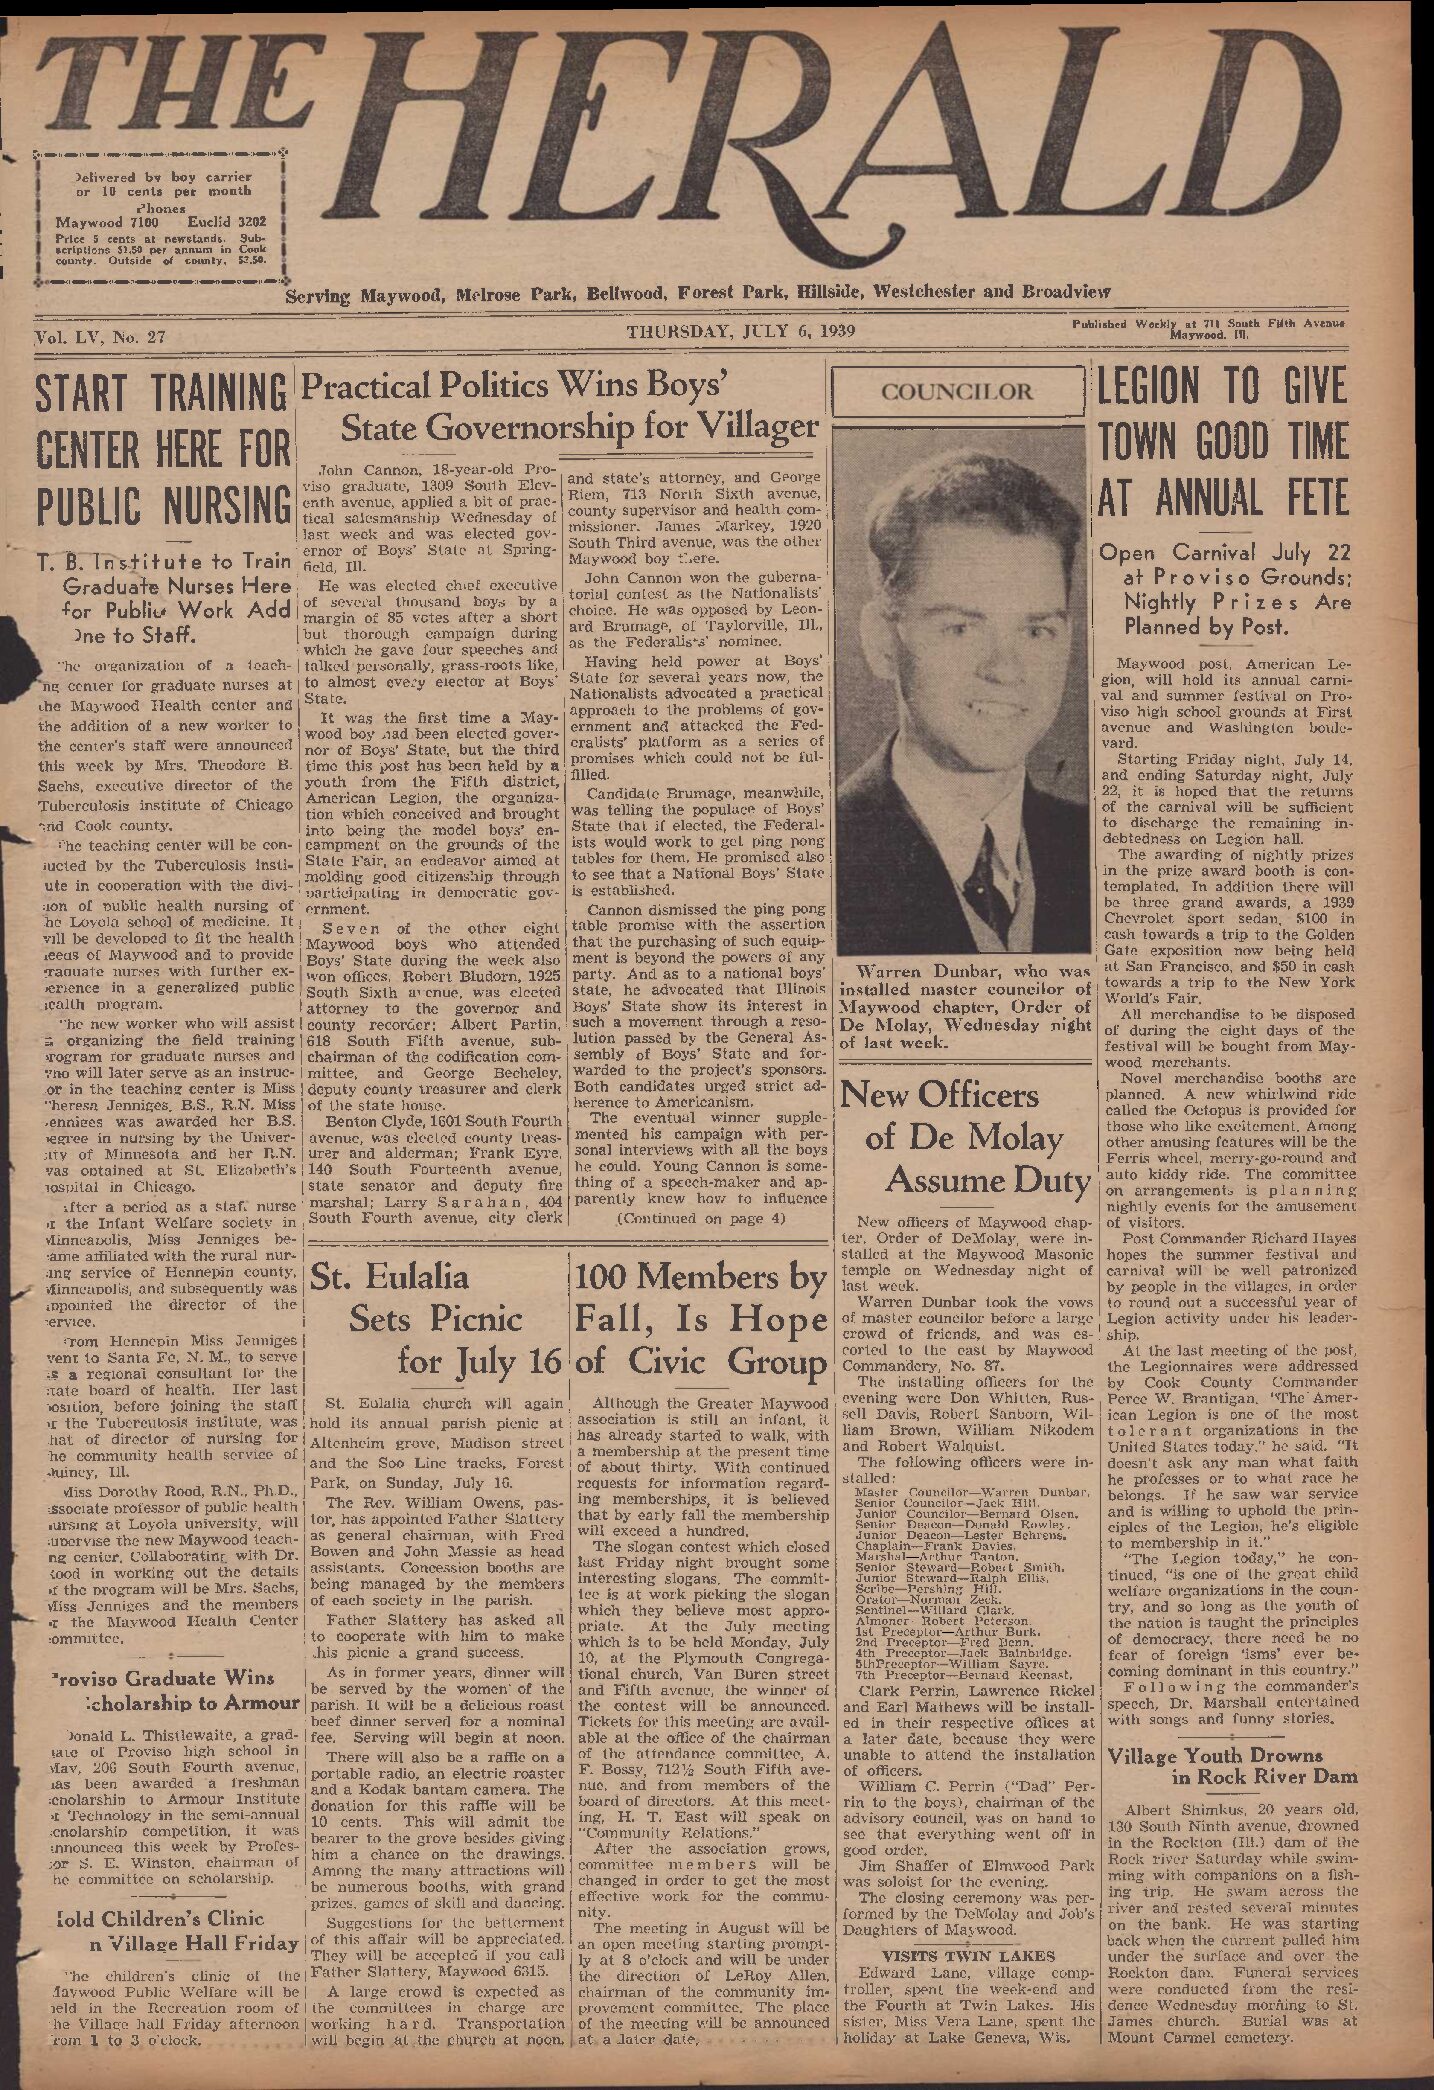 The Herald – 19390706